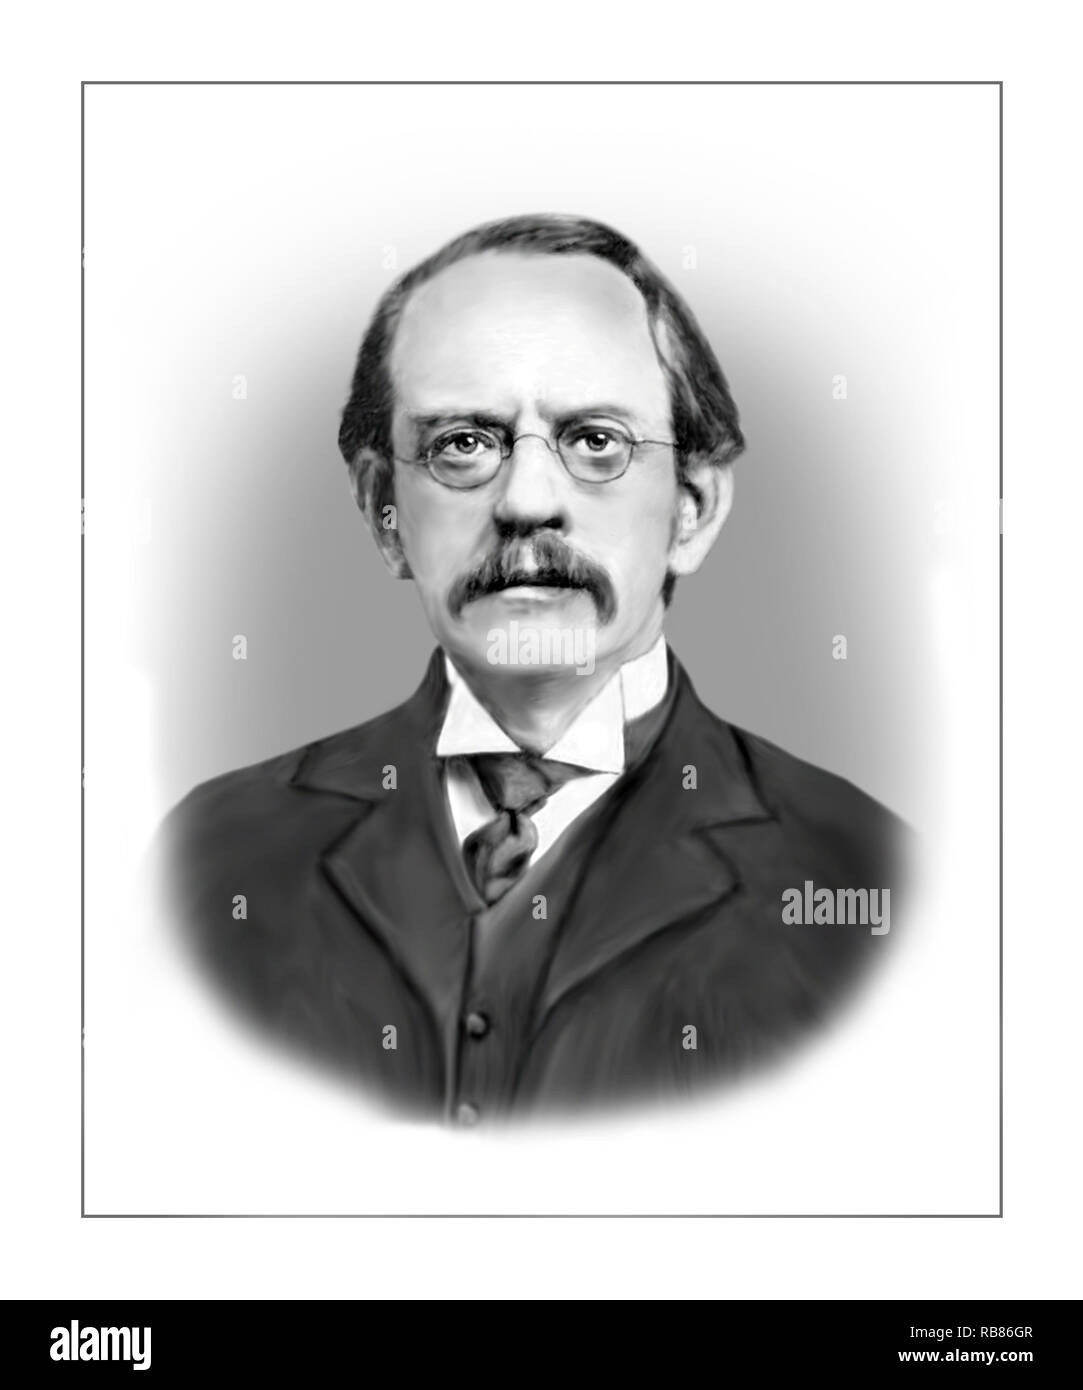 HistoricalFindings Photo: Sir Joseph John Thomson,JJ  Thomson,1856-1940,British Physicist,Nobel Laureate